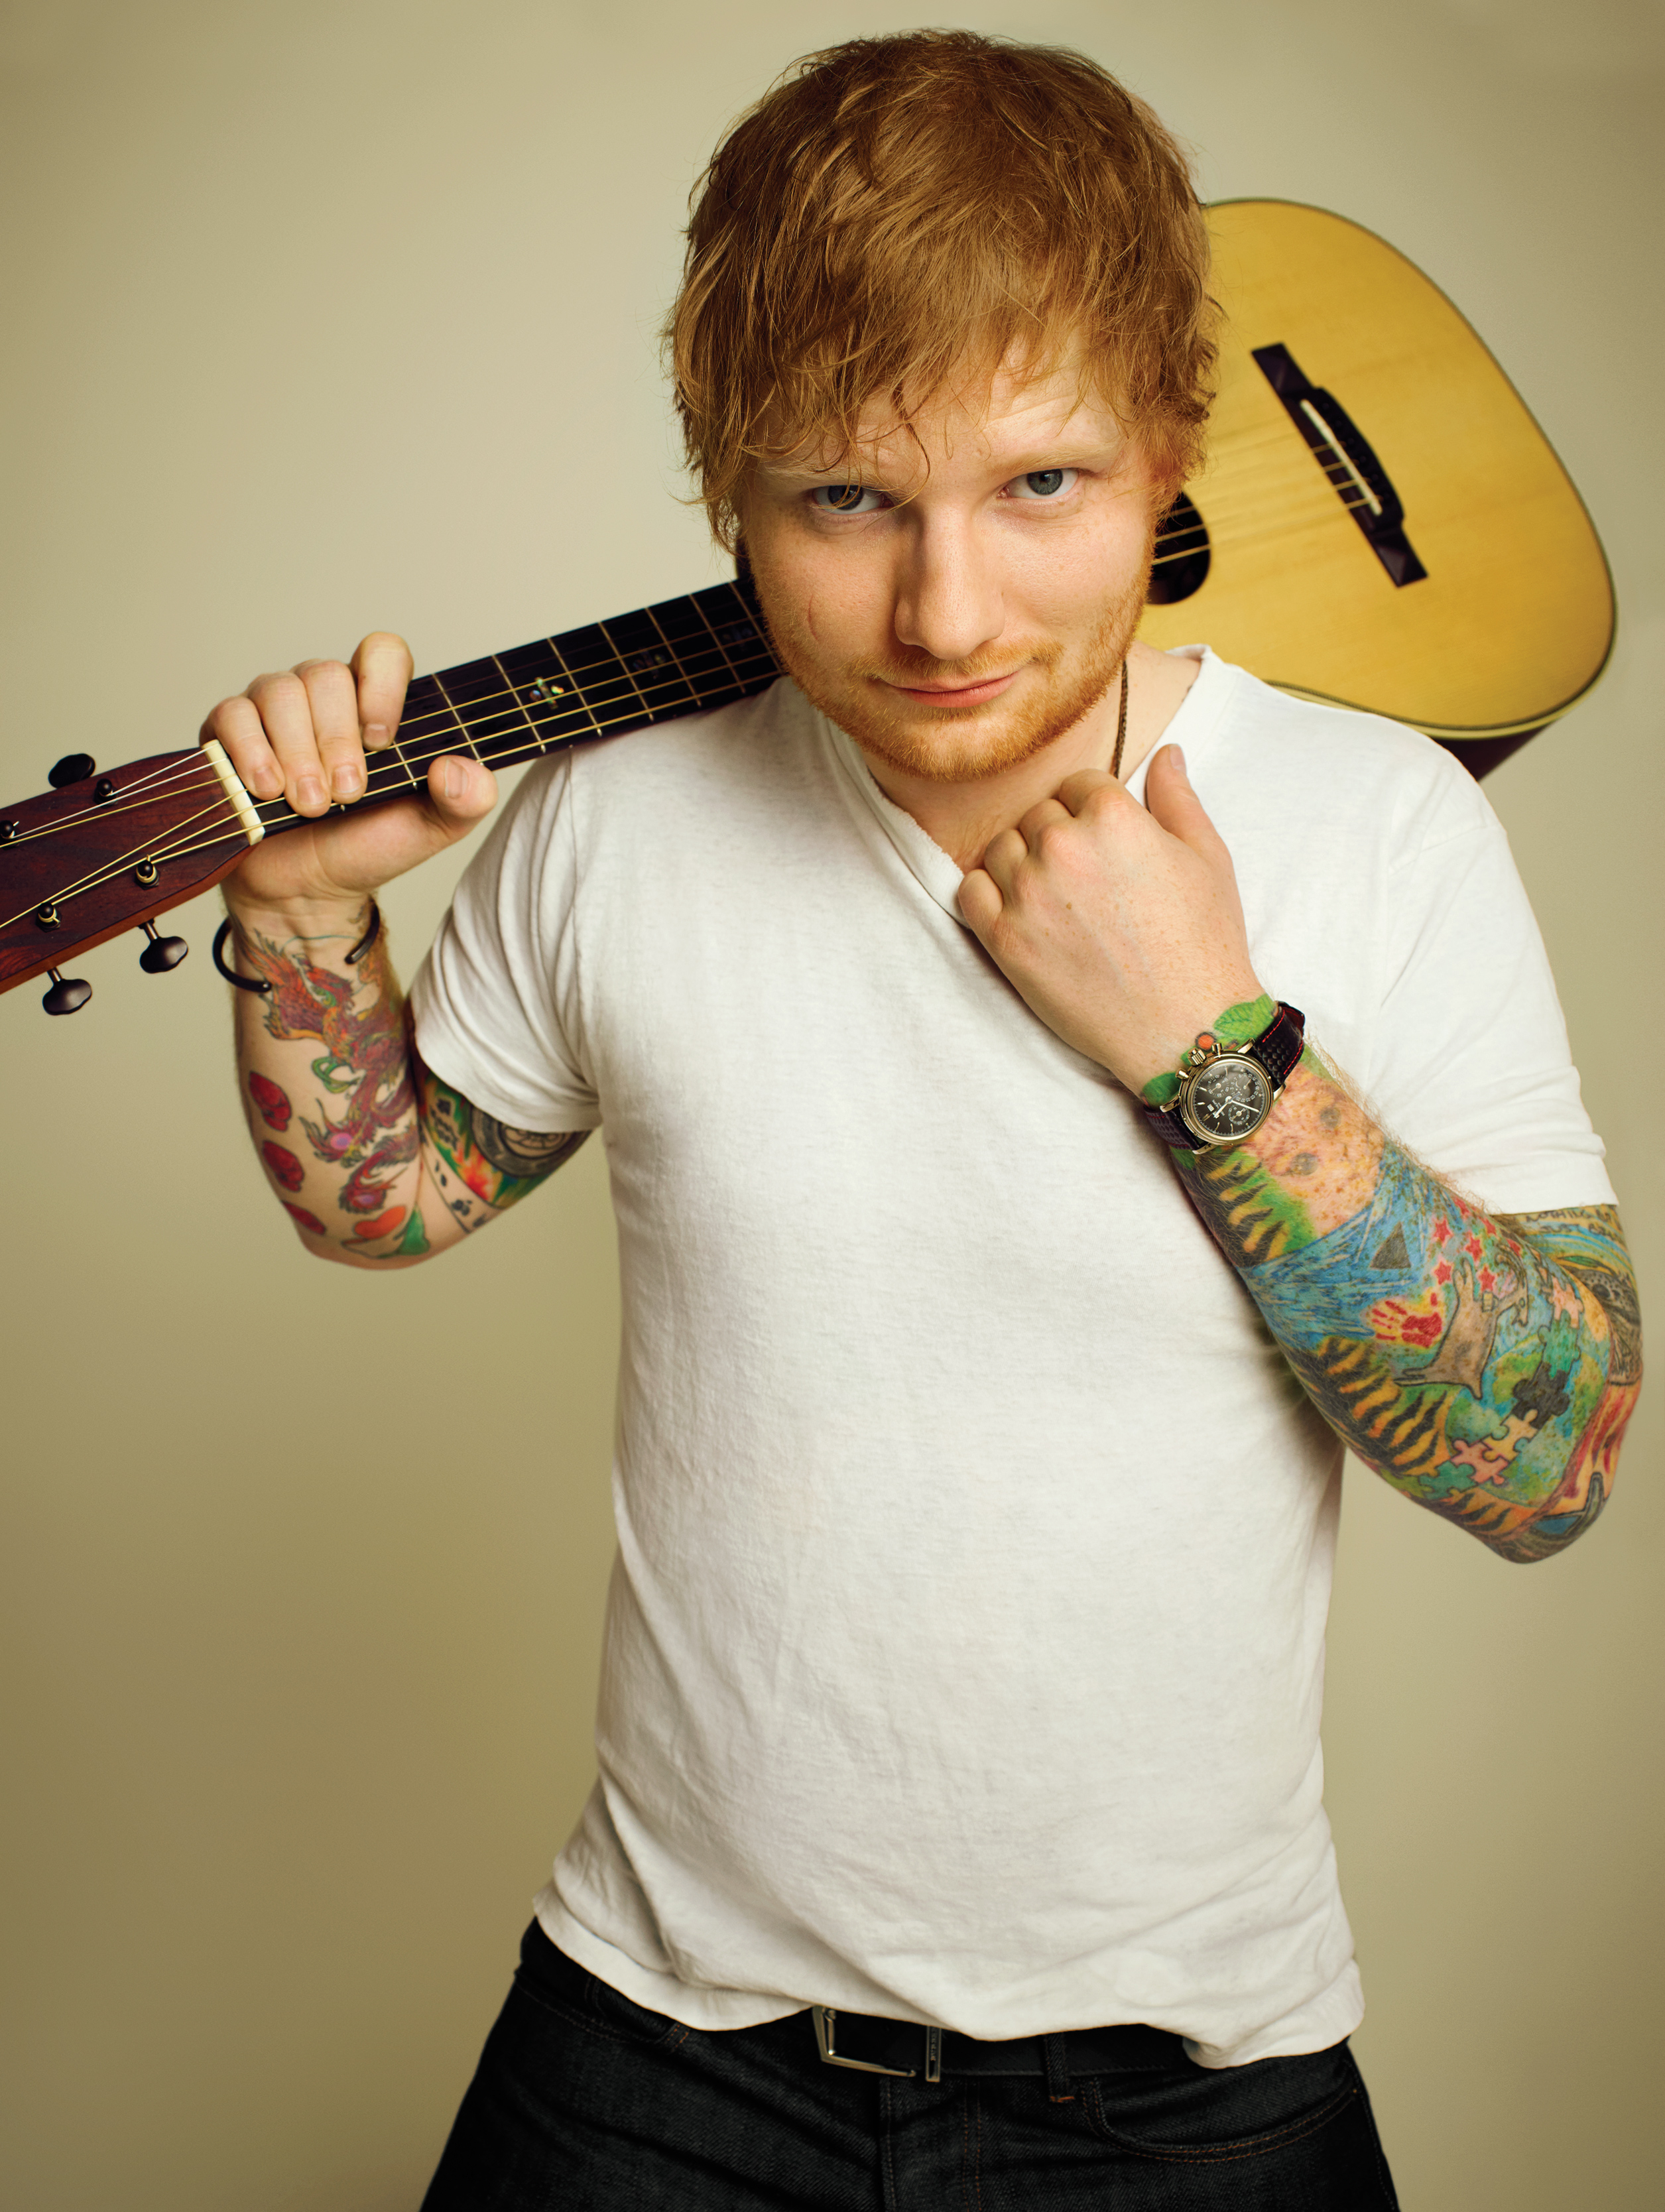 Ed Sheeran Fairytale Of New York chords